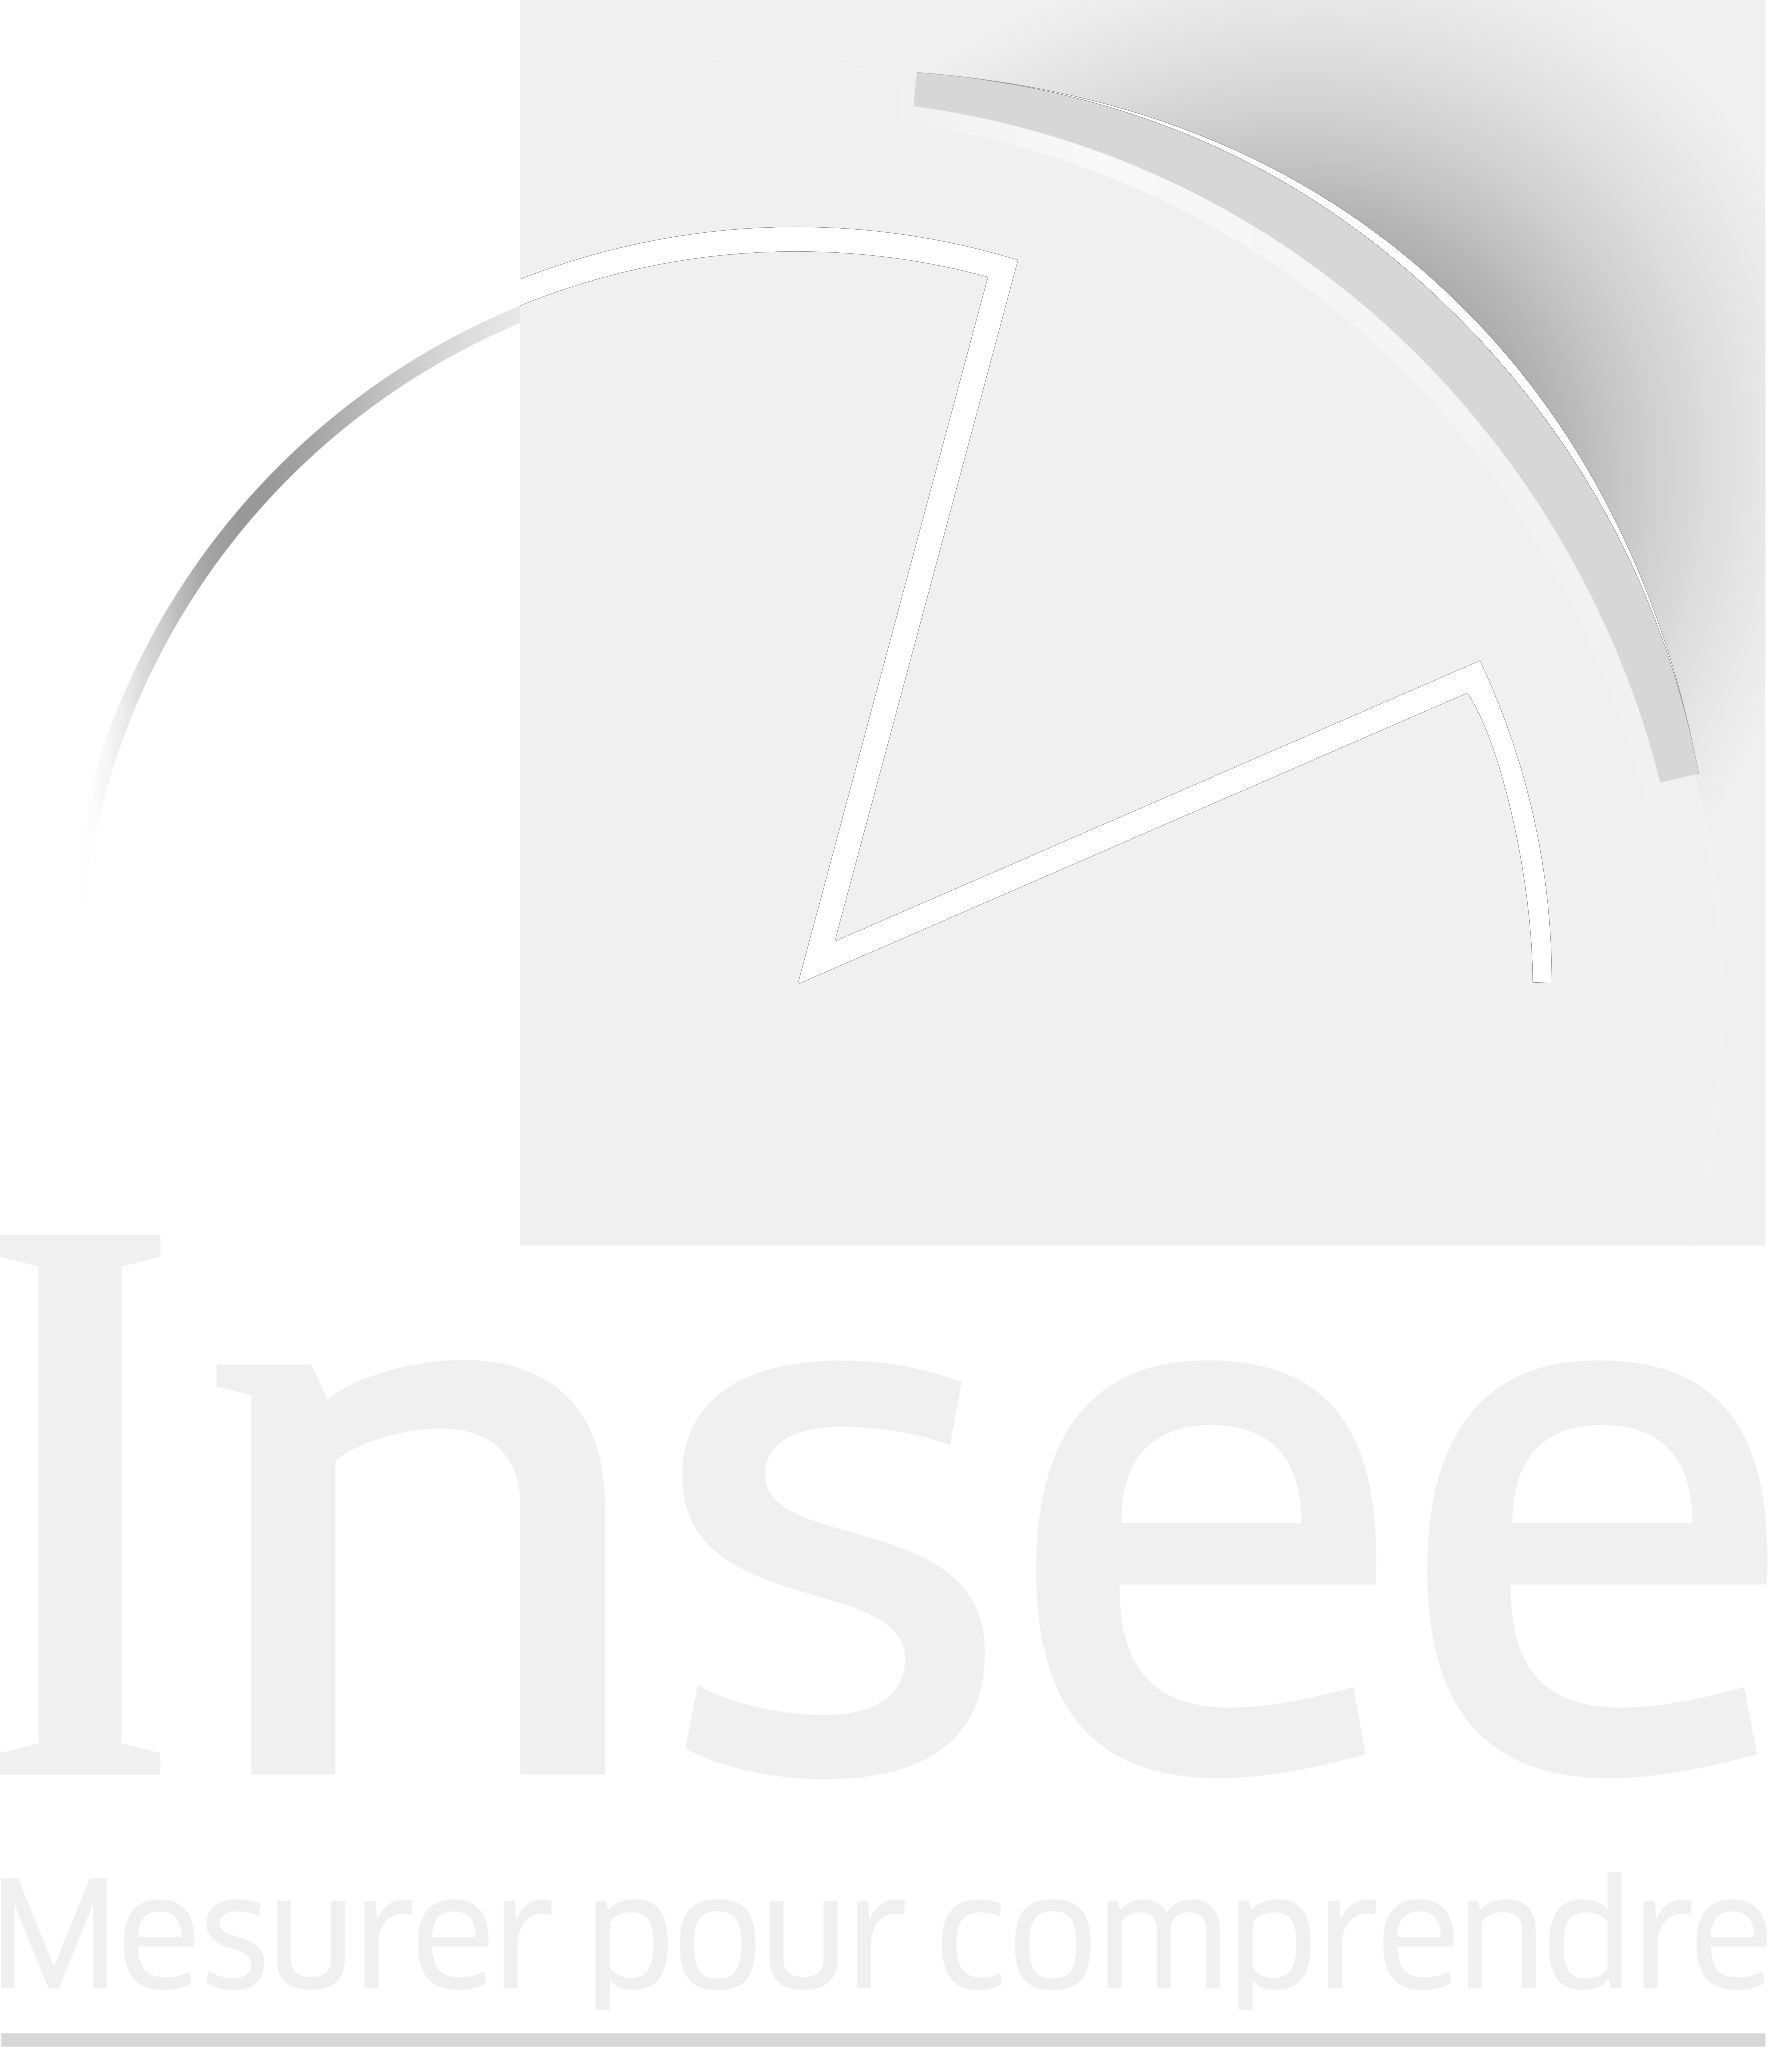 Logo Insee